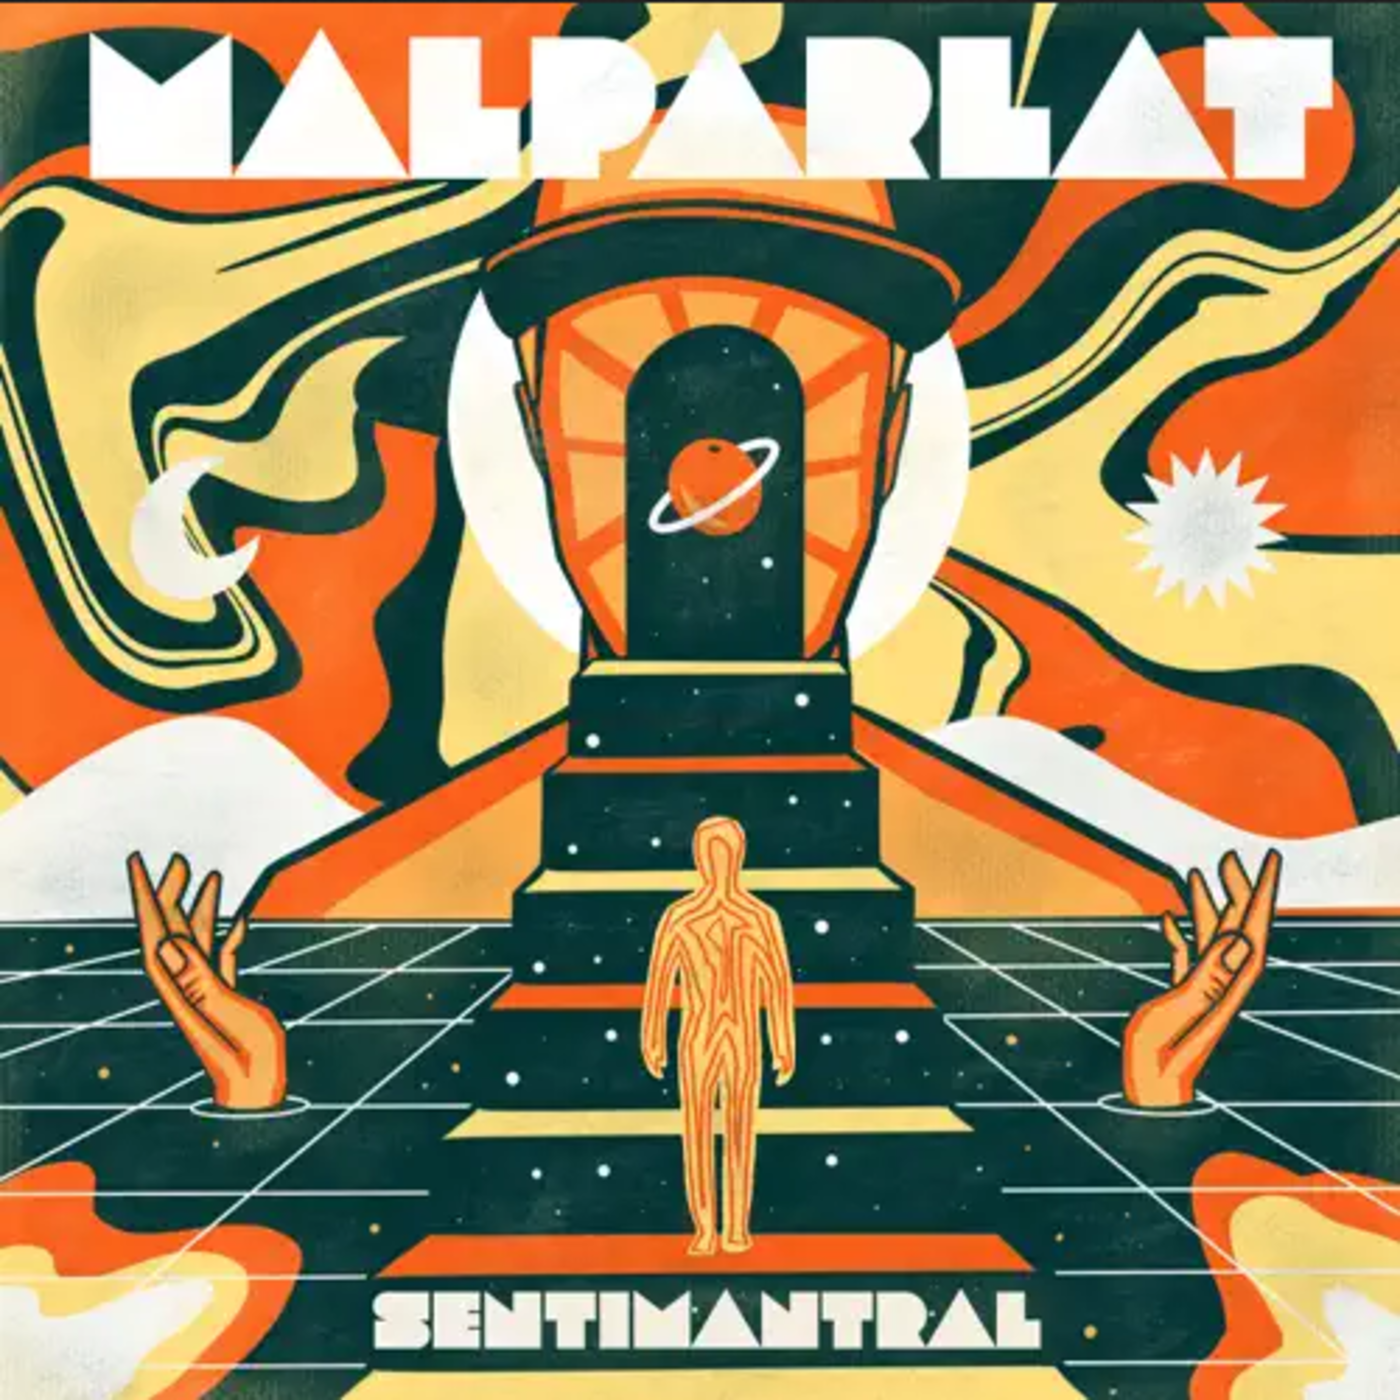 Malparlat - Sentimantral | musica en valencià